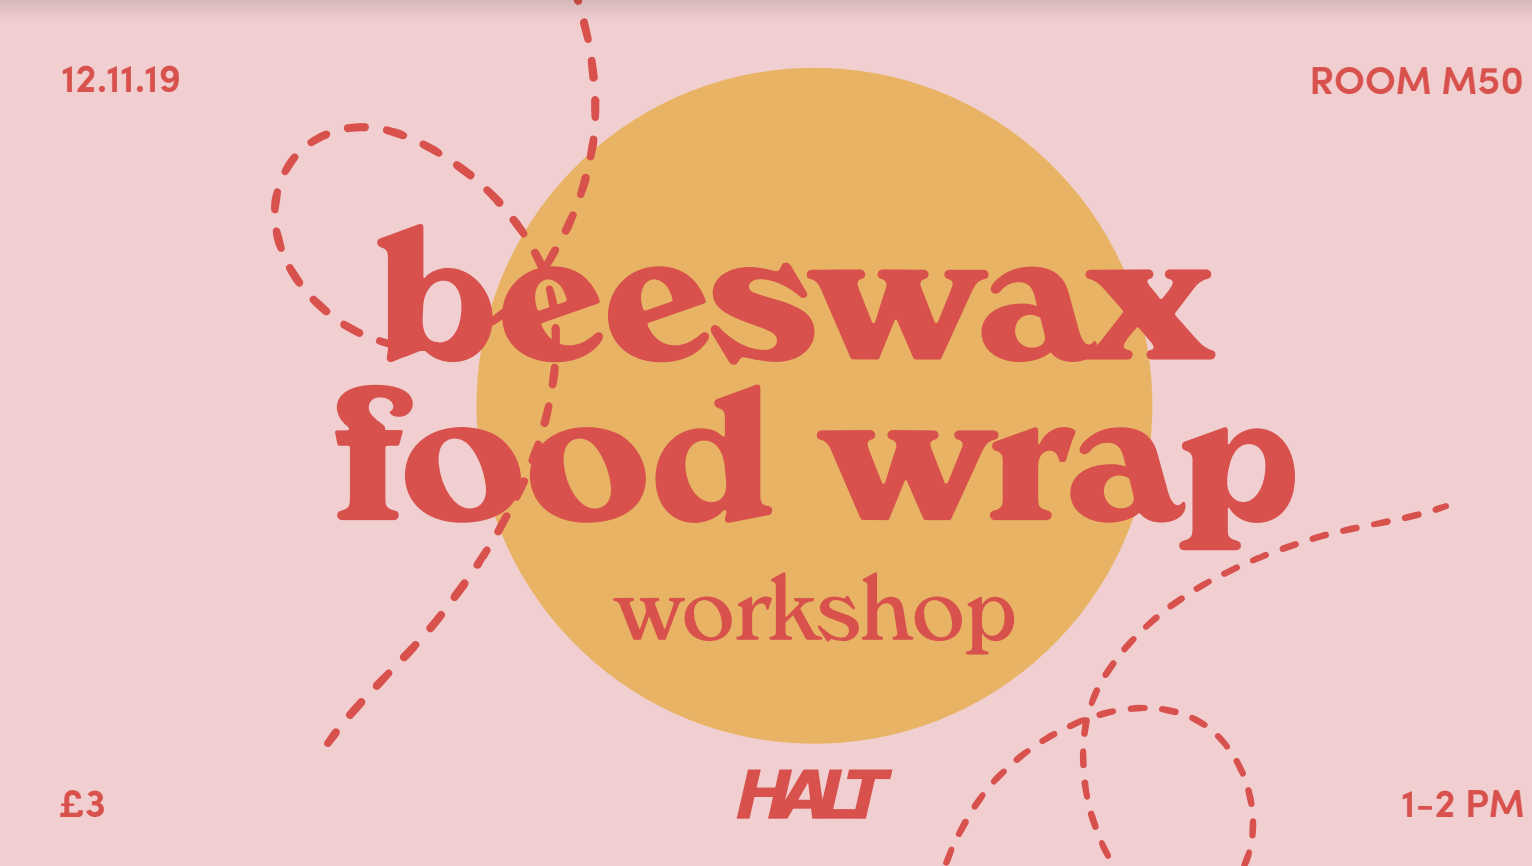 Beeswax food wrap workshop